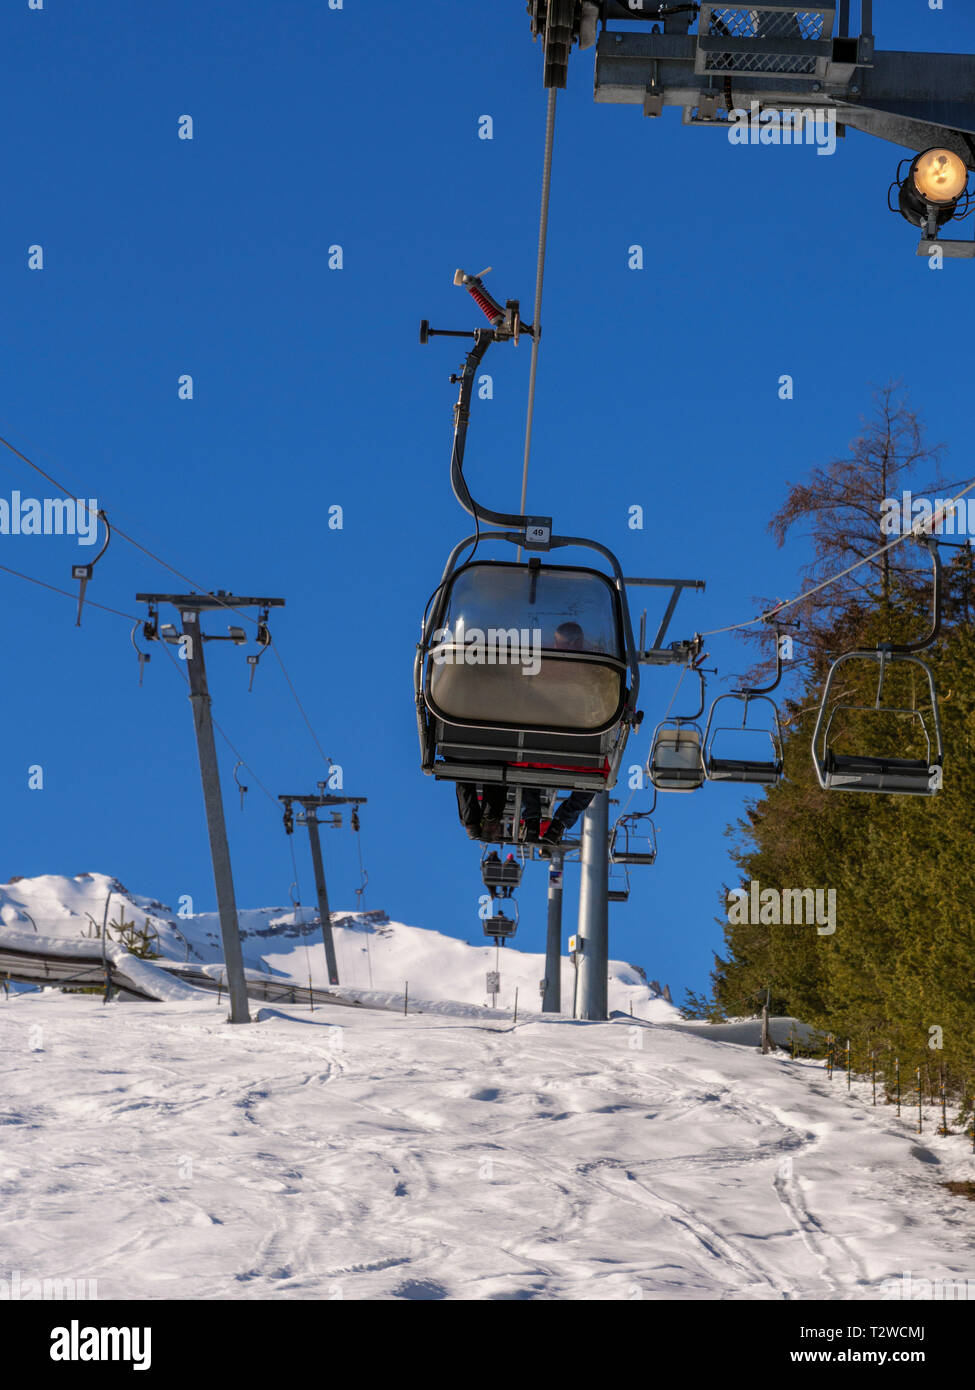 skilift and piste, skiing area Hochimst, Imst, Tyrol, Austria, Europe Stock Photo